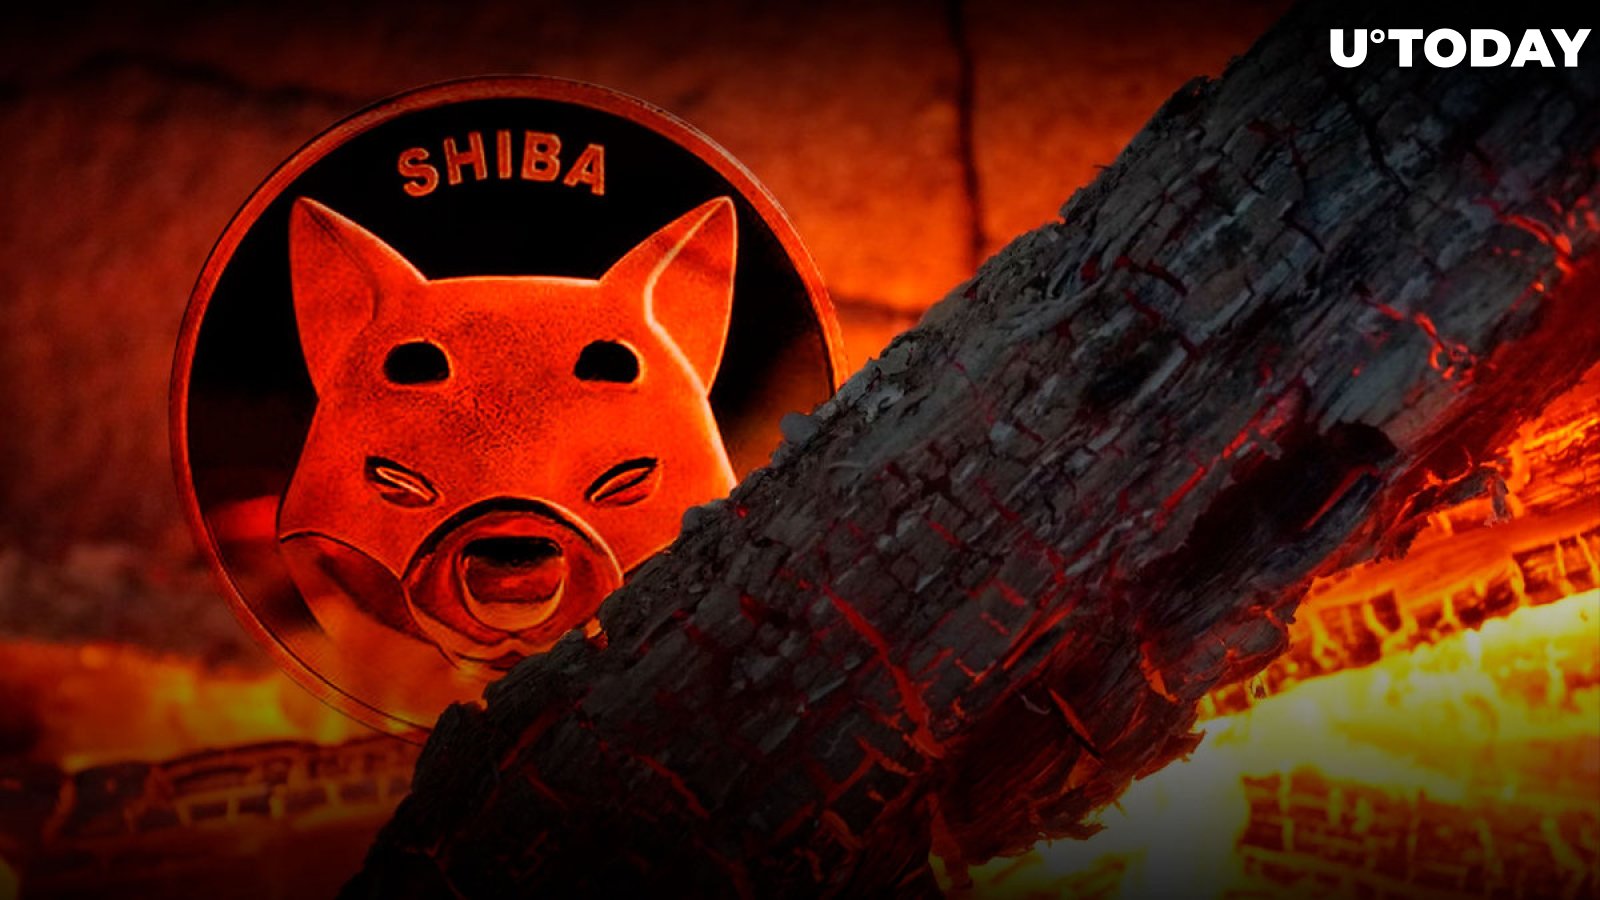 711 Million SHIB Burned in Last Week, Shiba Inu Burn Rate Up 824%